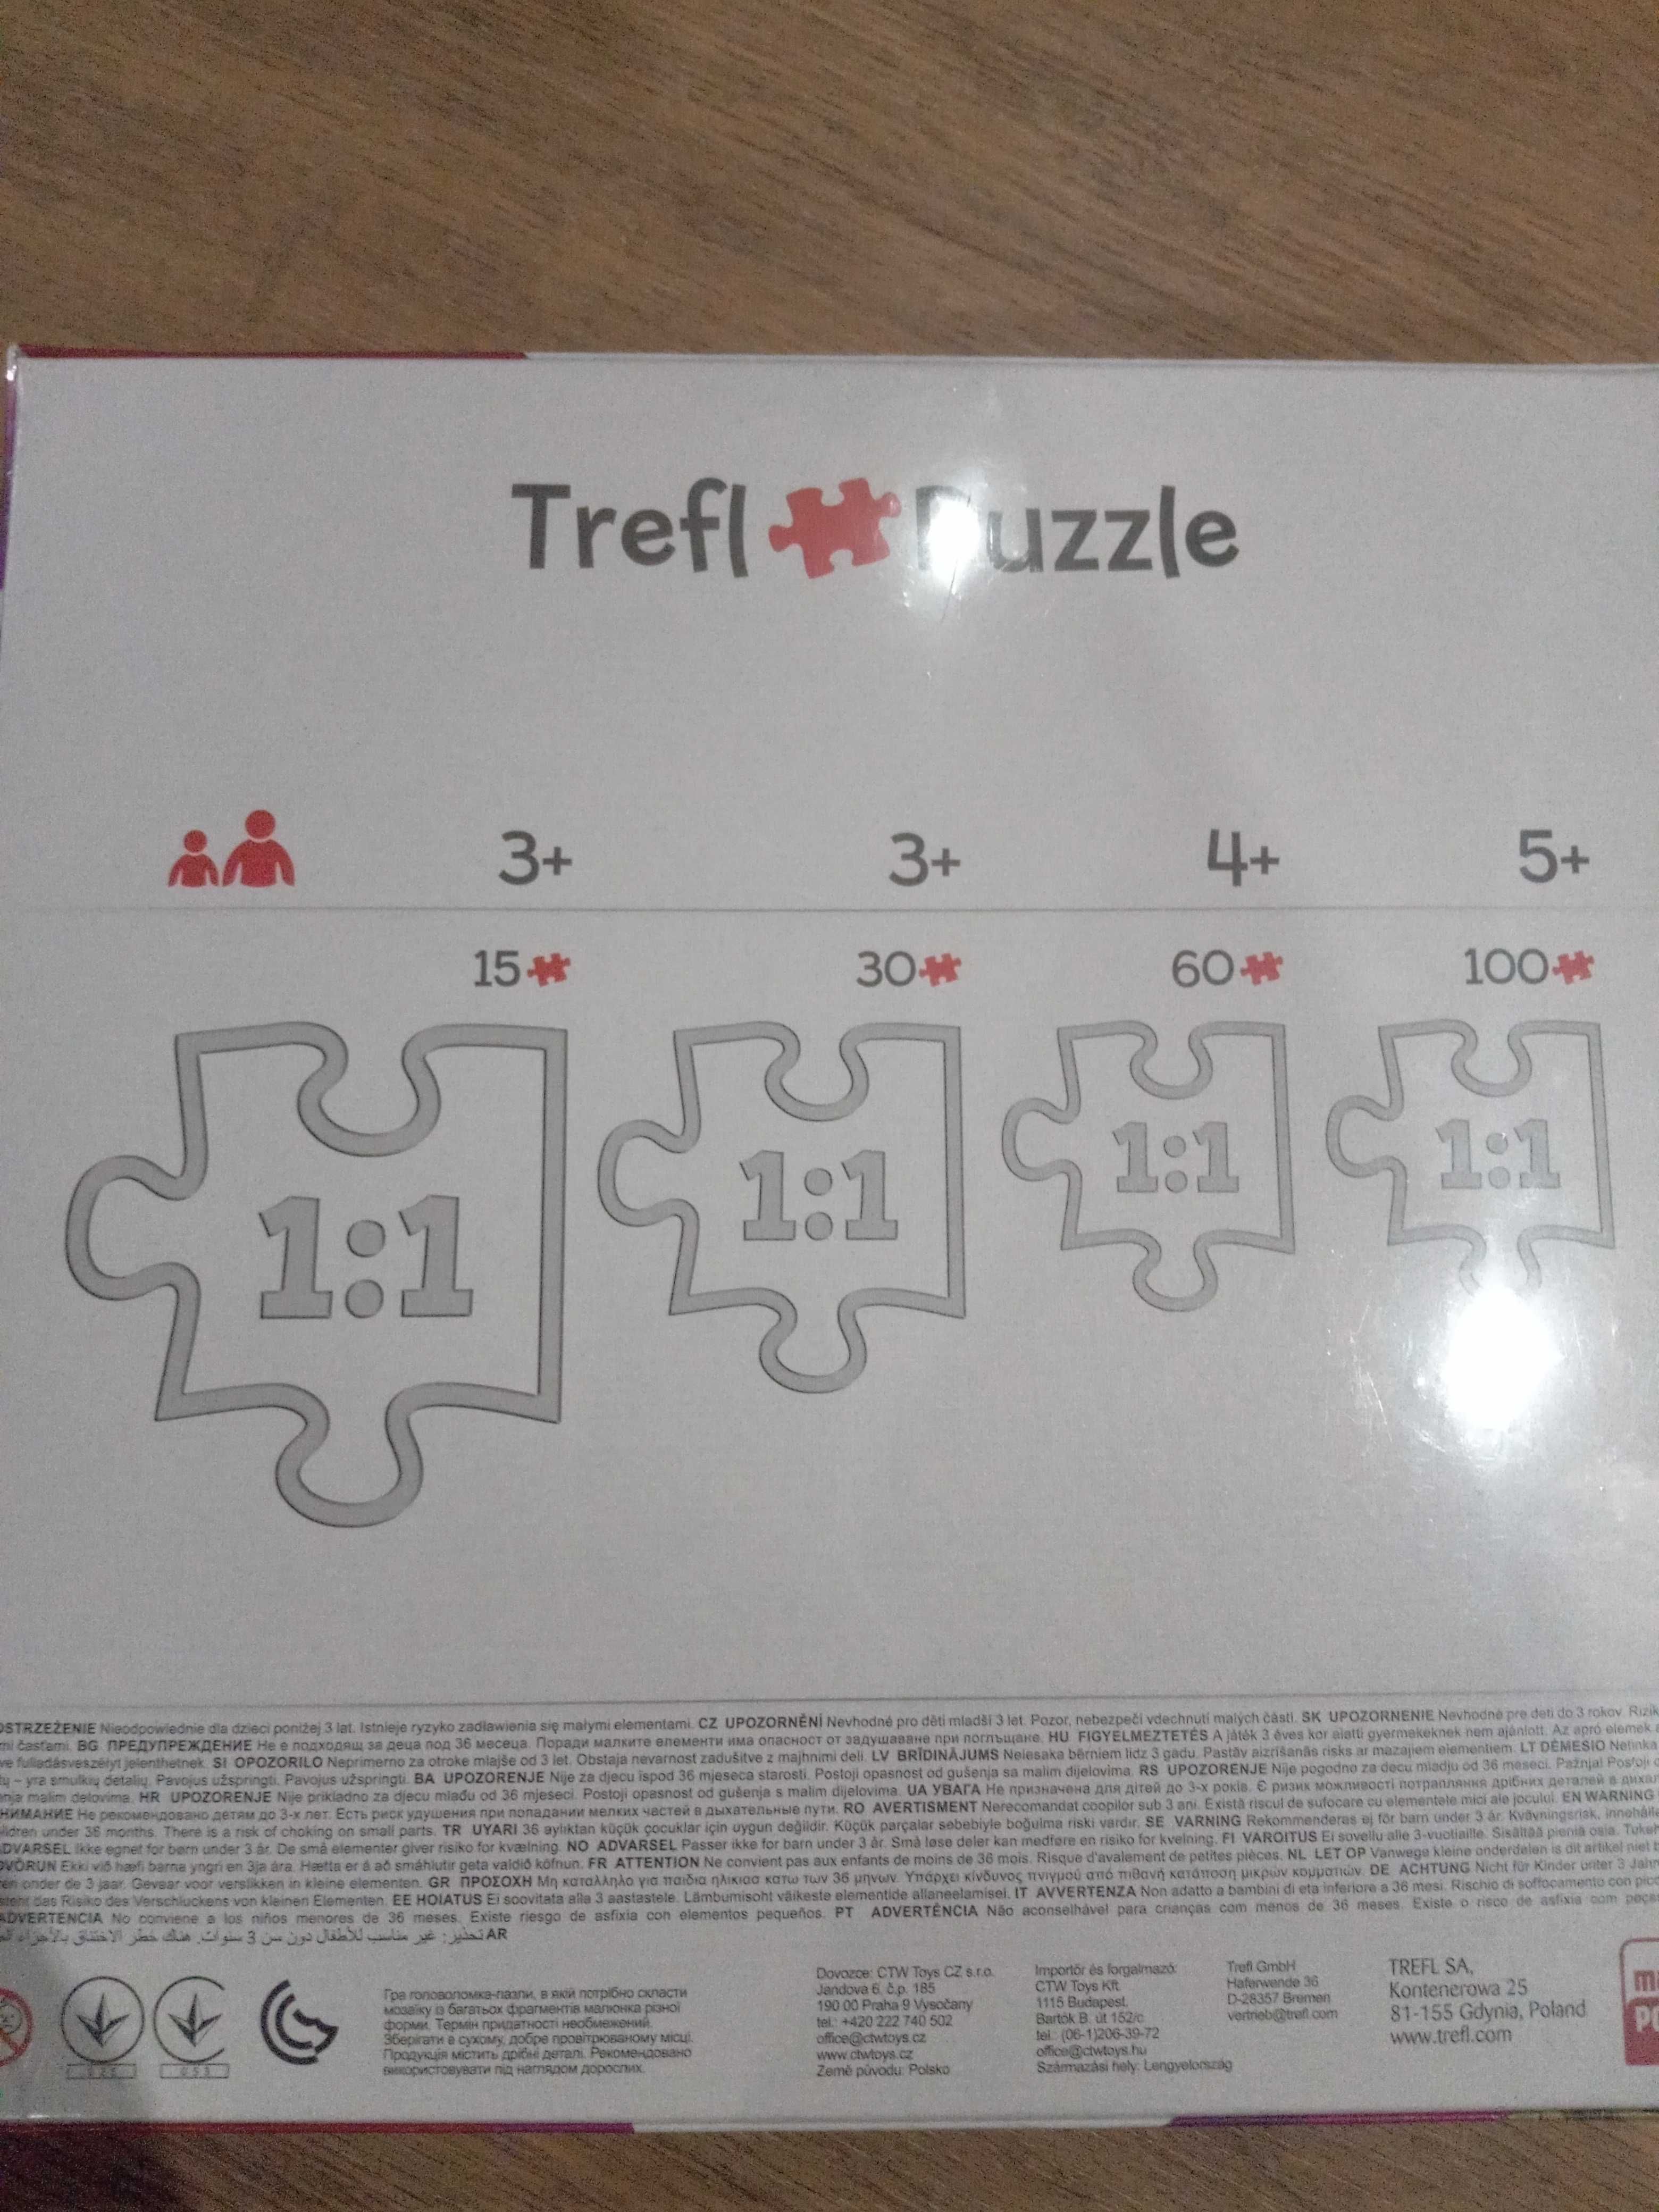 Puzzle trefl 4w1